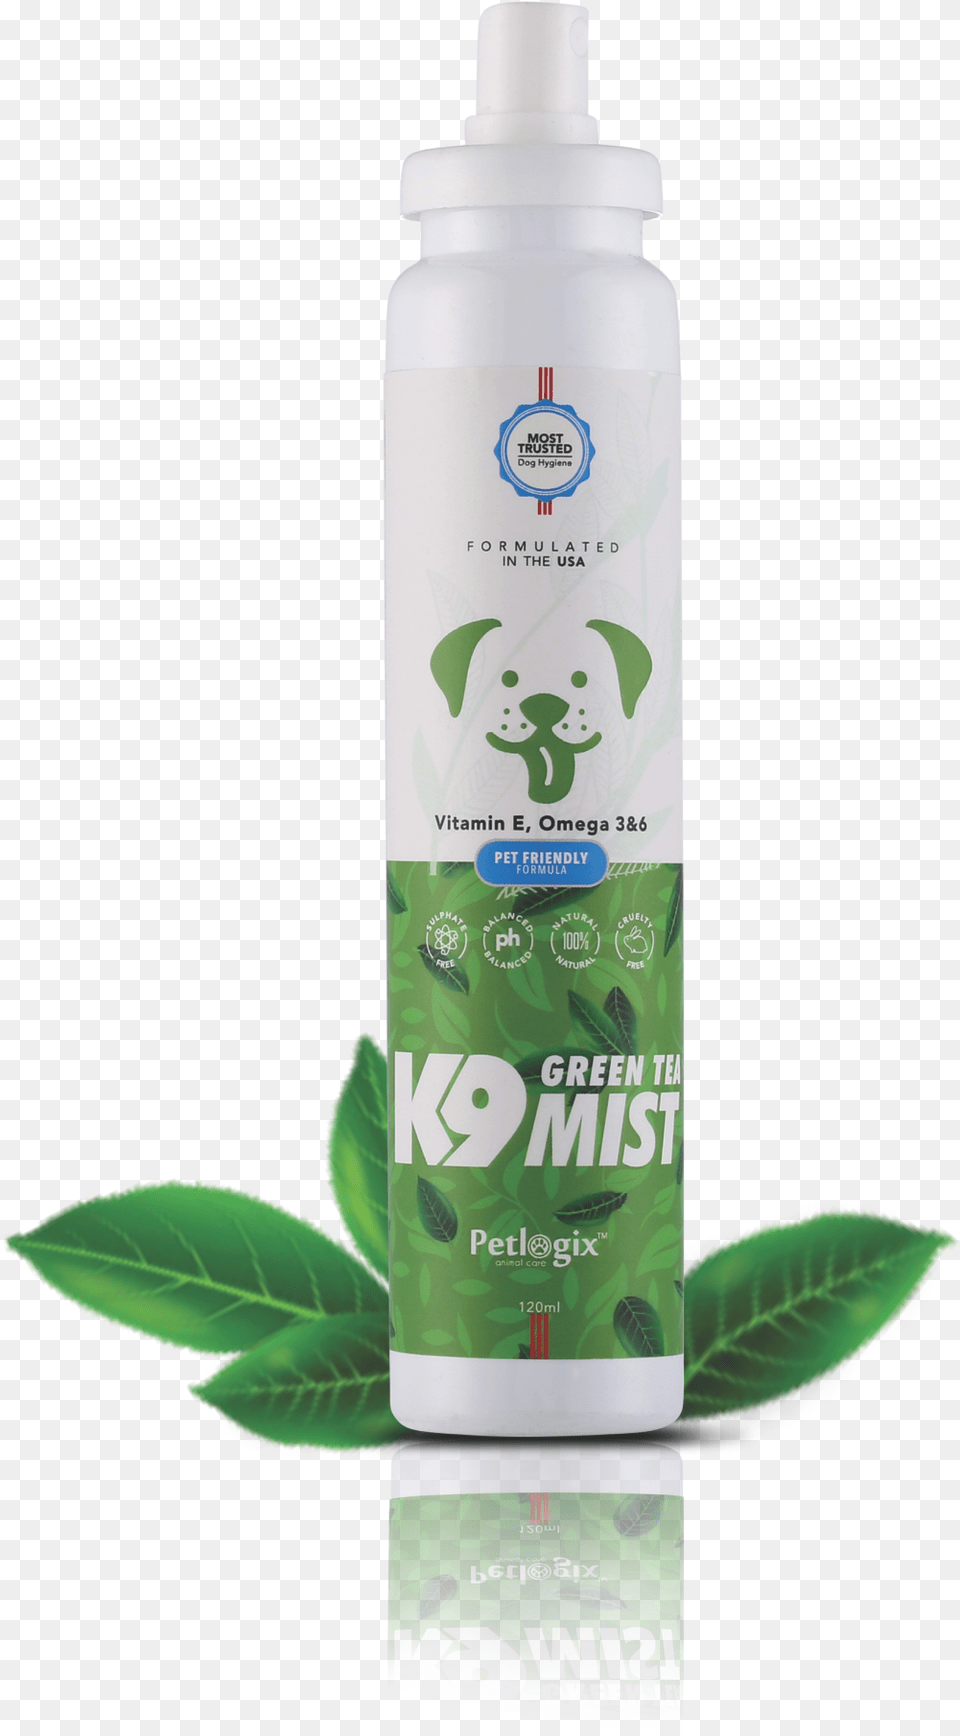 Green Tea K9 Misttitle Green Tea K9 Mist Plastic Bottle, Herbal, Herbs, Plant, Cosmetics Png